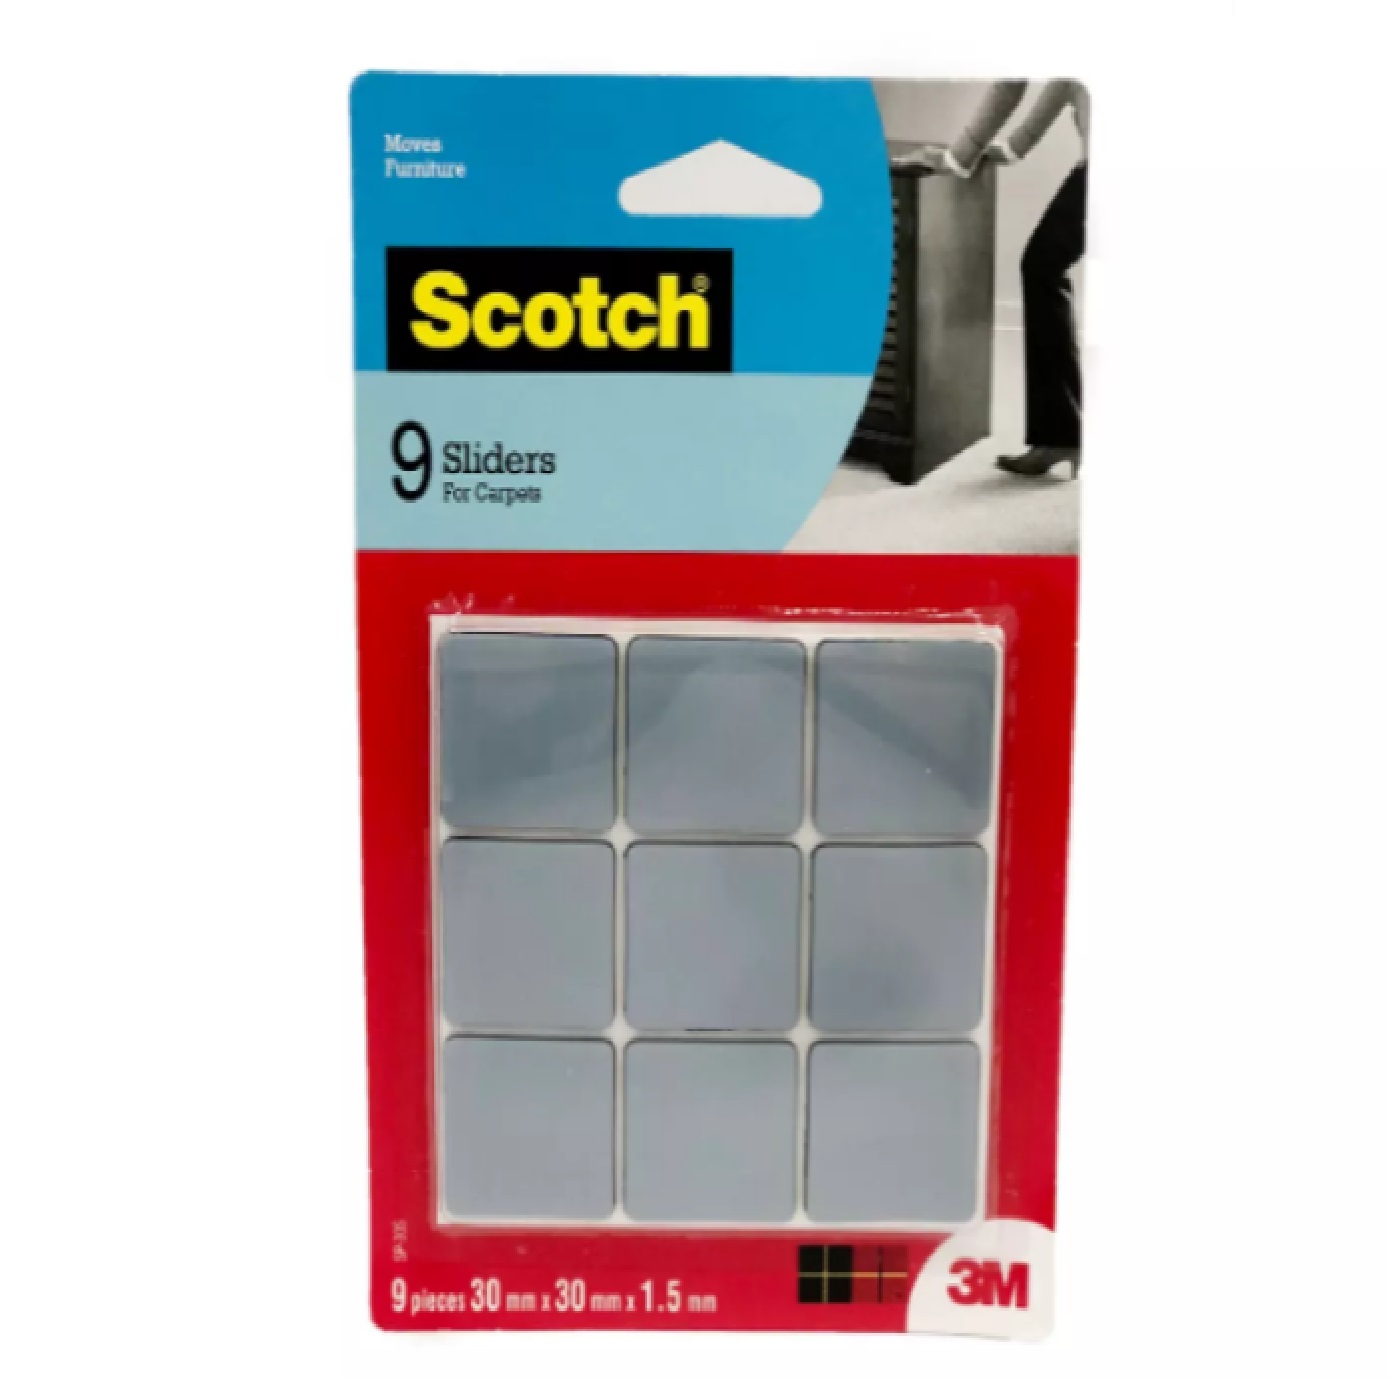 3M Scotch Slider Square 30MM X 30MM 9PC/Pack